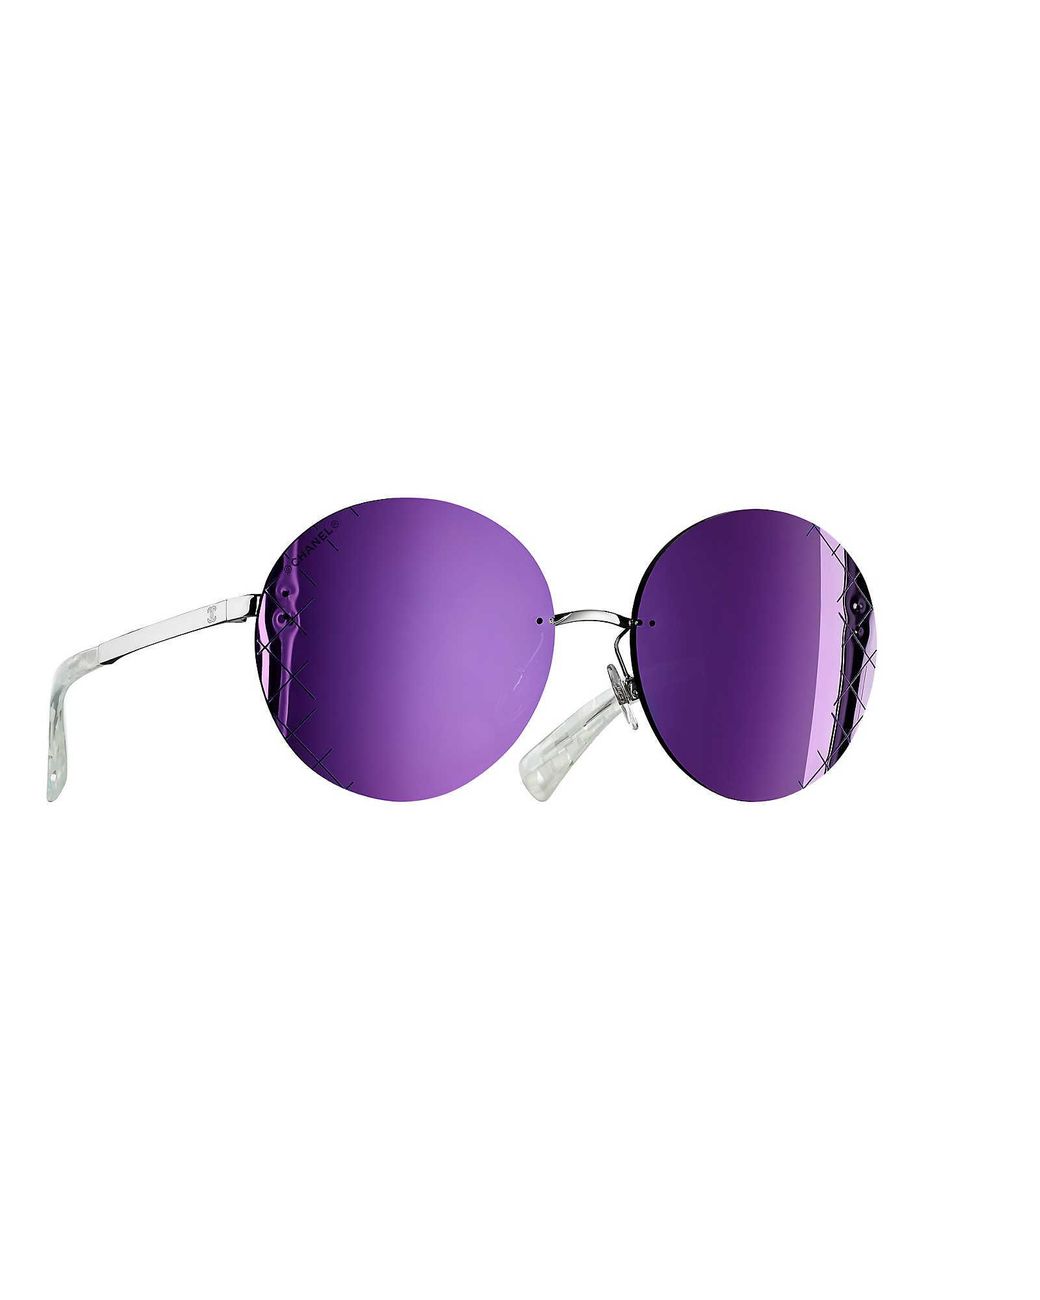 Chanel Purple Round Sunglasses